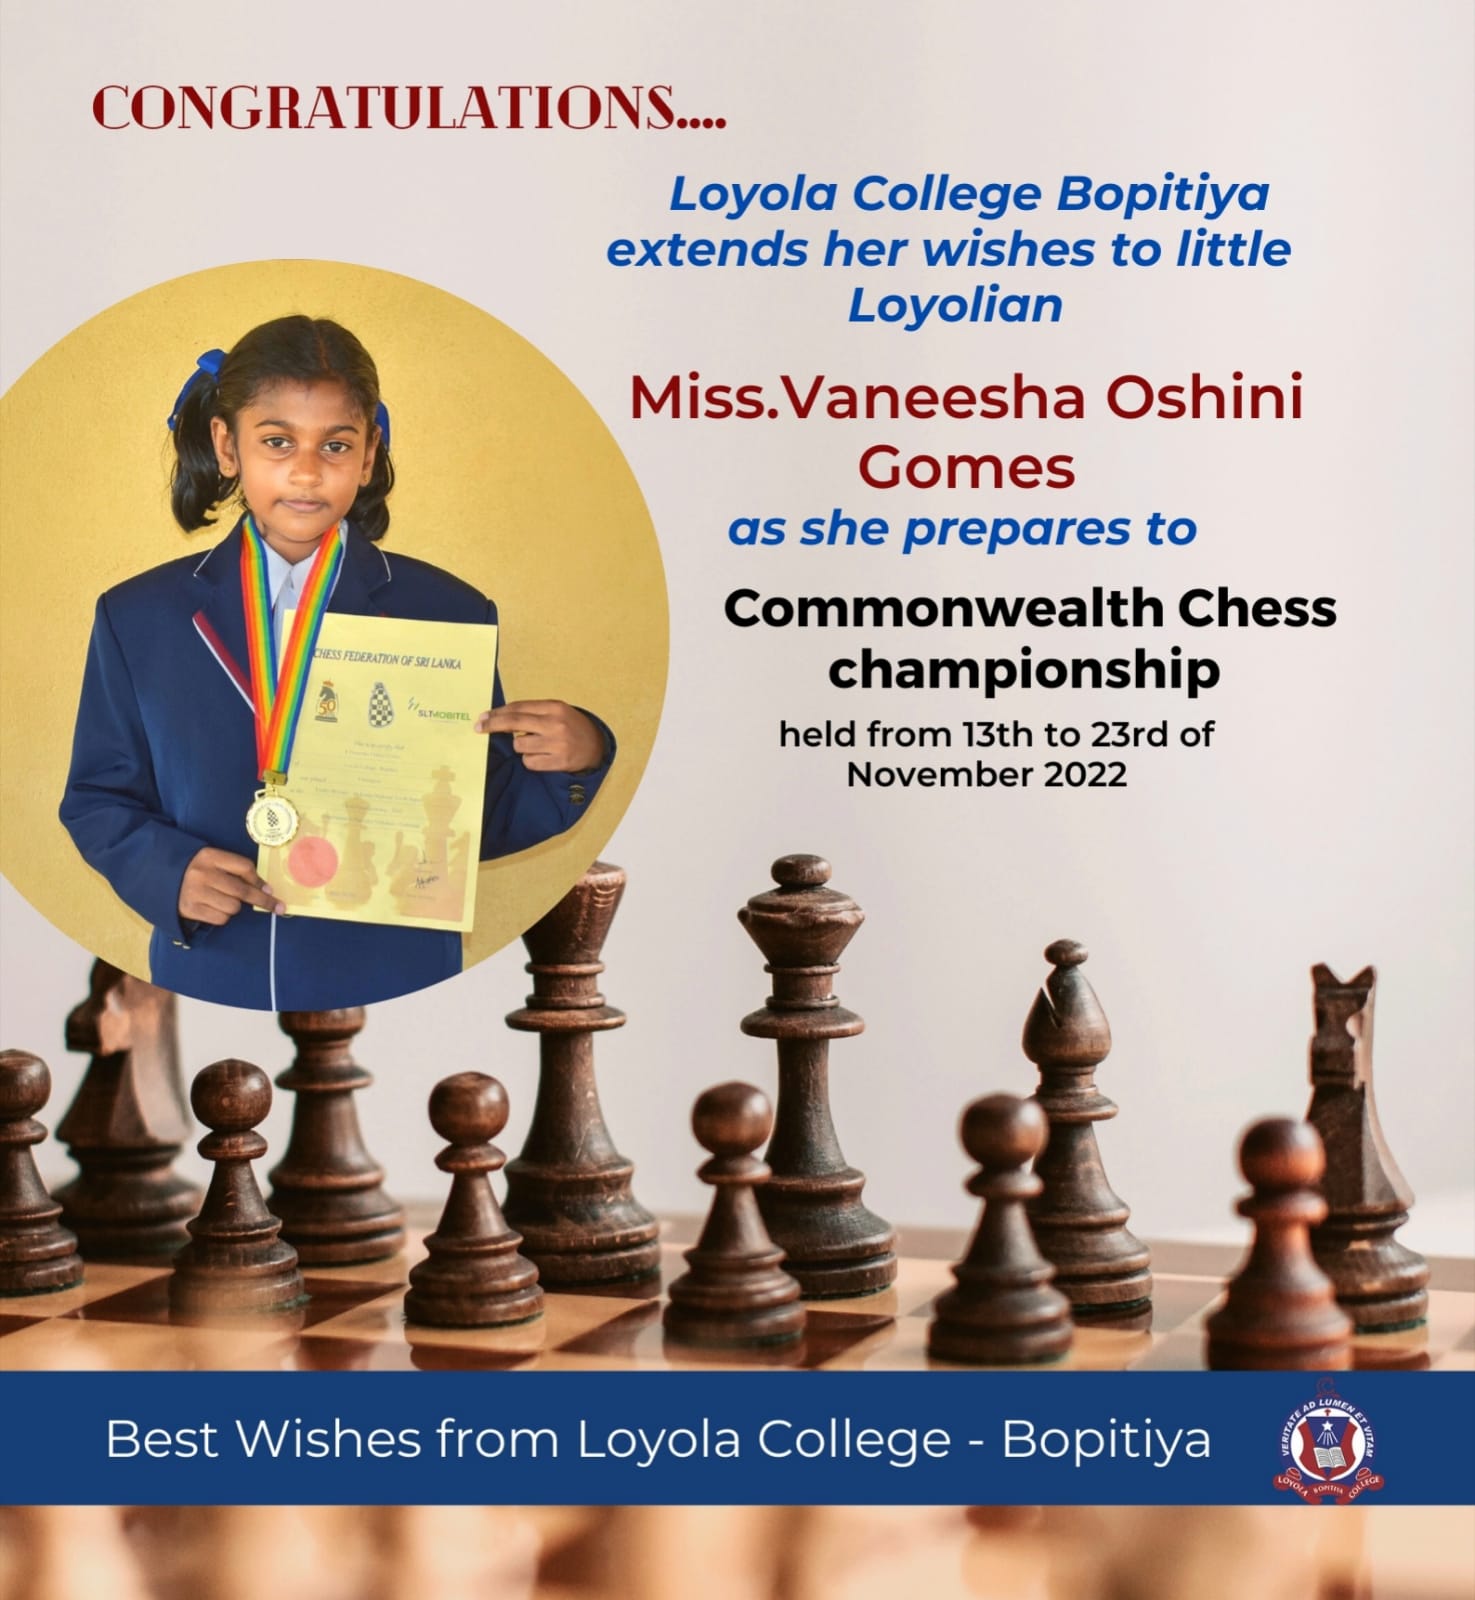 Ms. Vaneesha Gomes prepares for Commonwealth Chess Championship